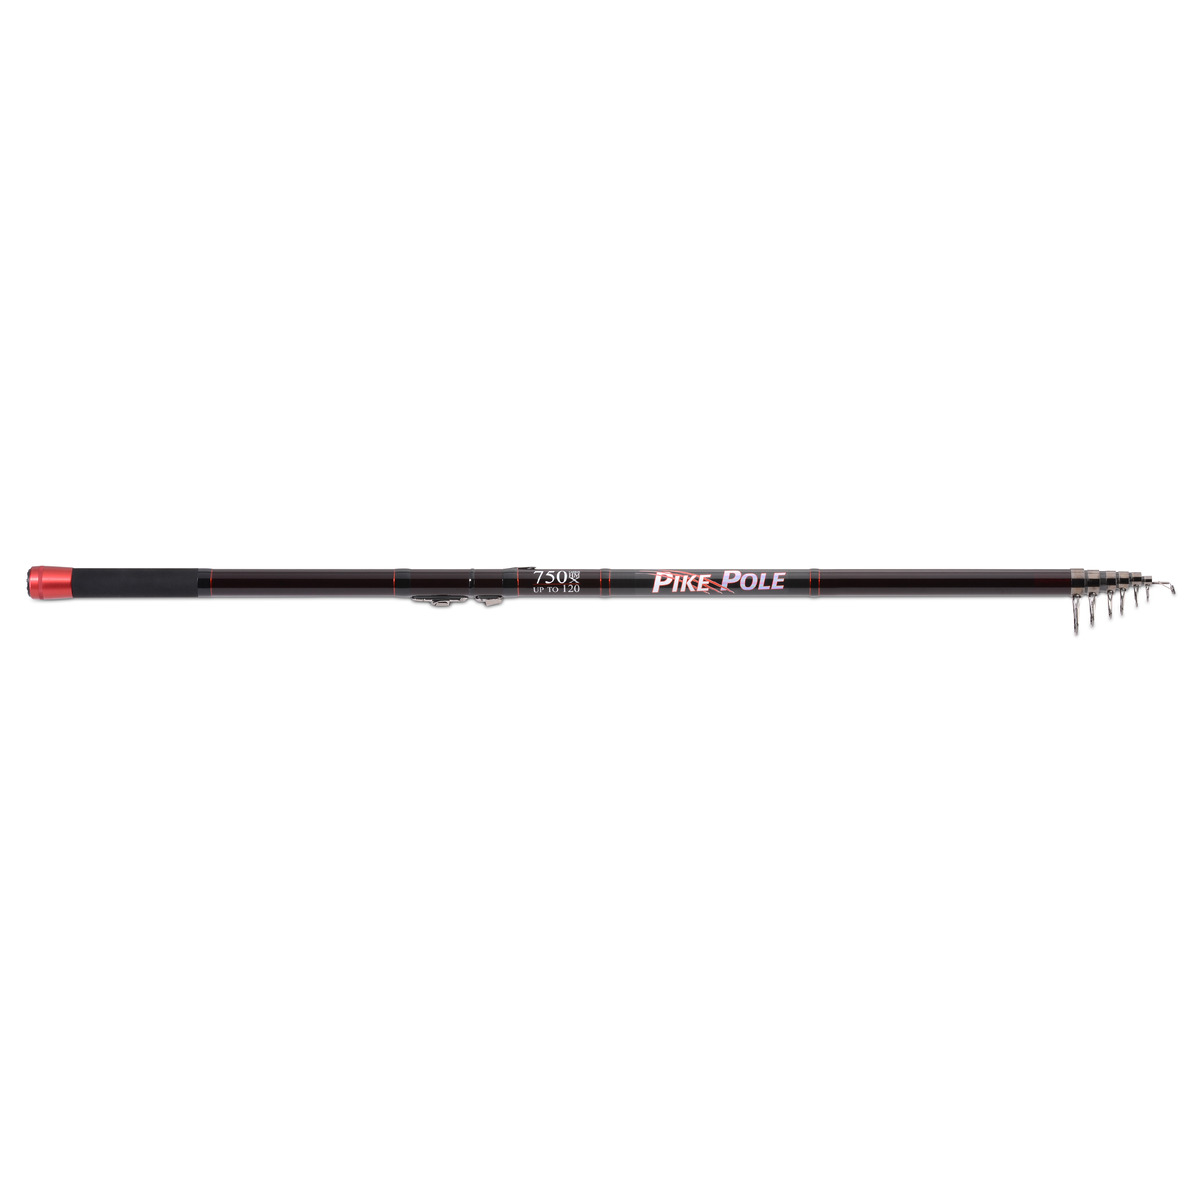 Iron Claw Pike Pole - 750 -120 g